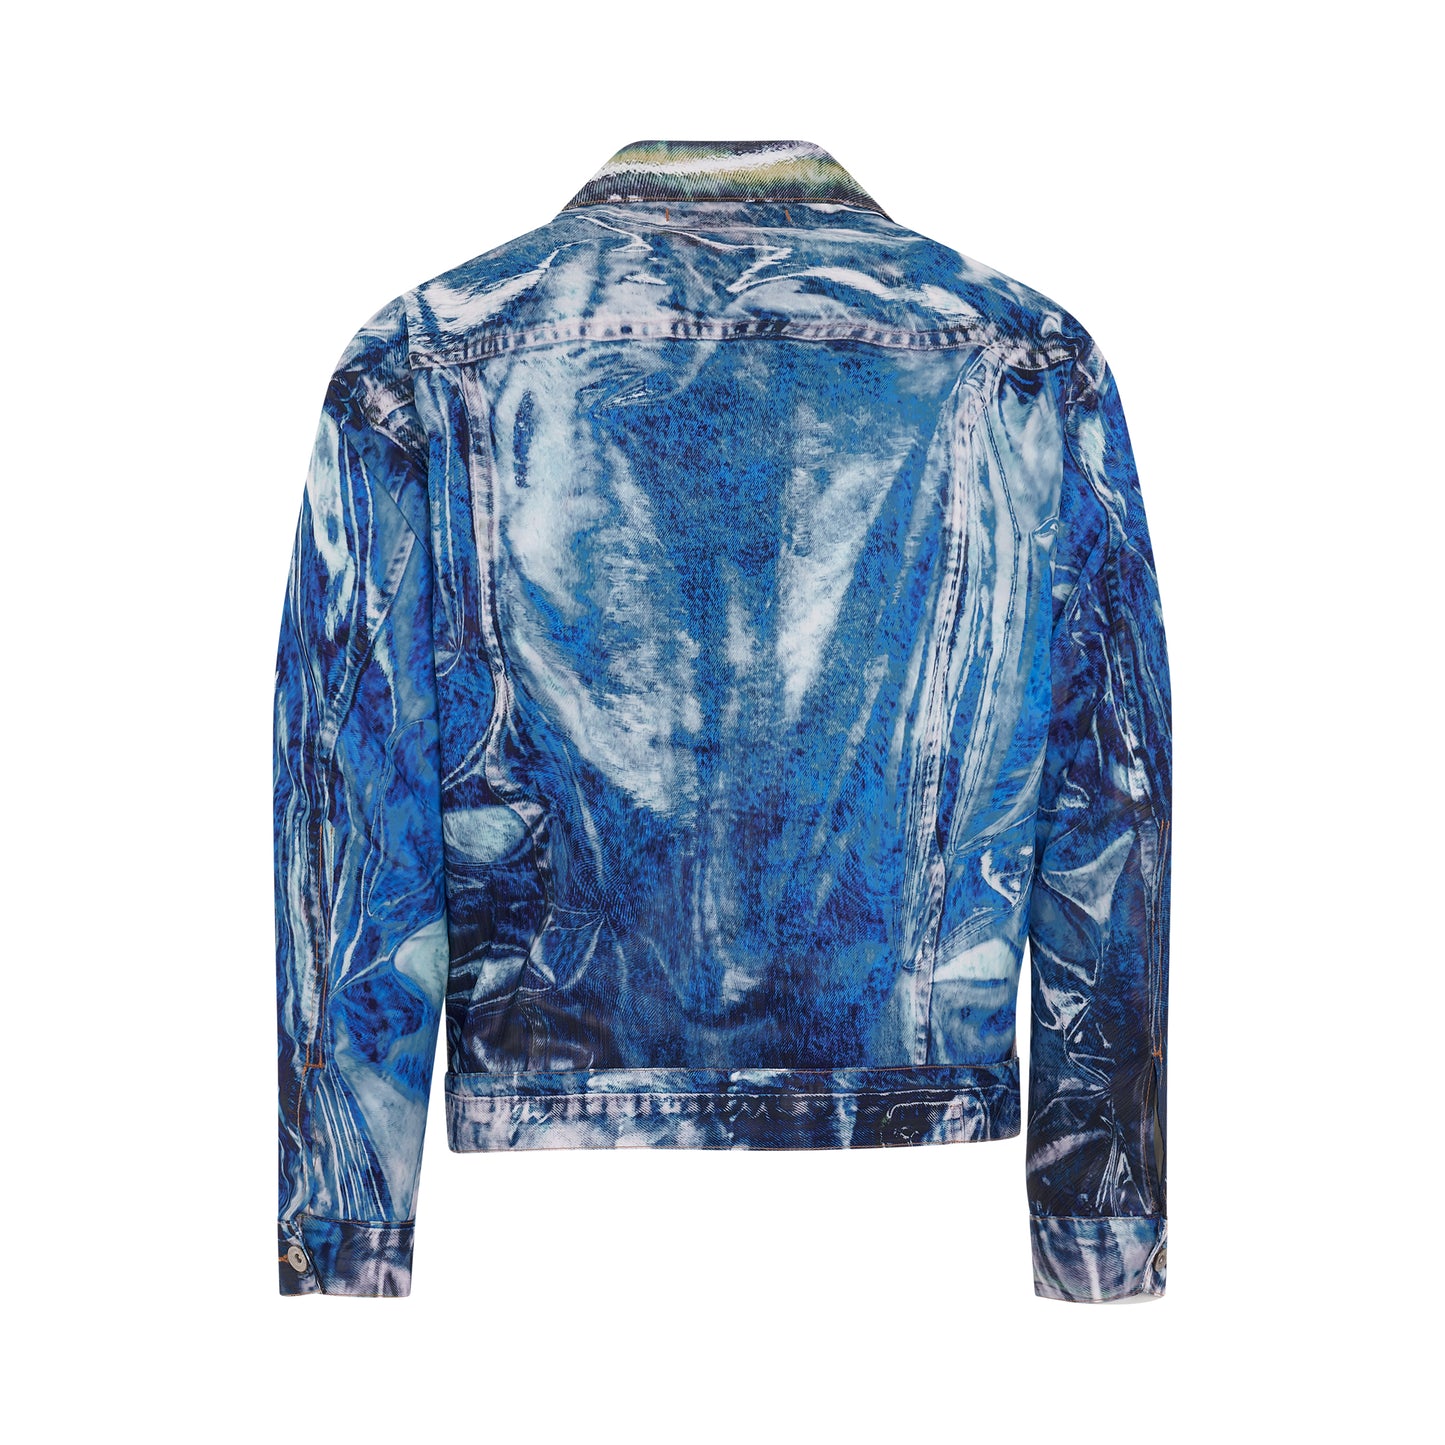 Mirage Printed Denim Jacket in Indigo